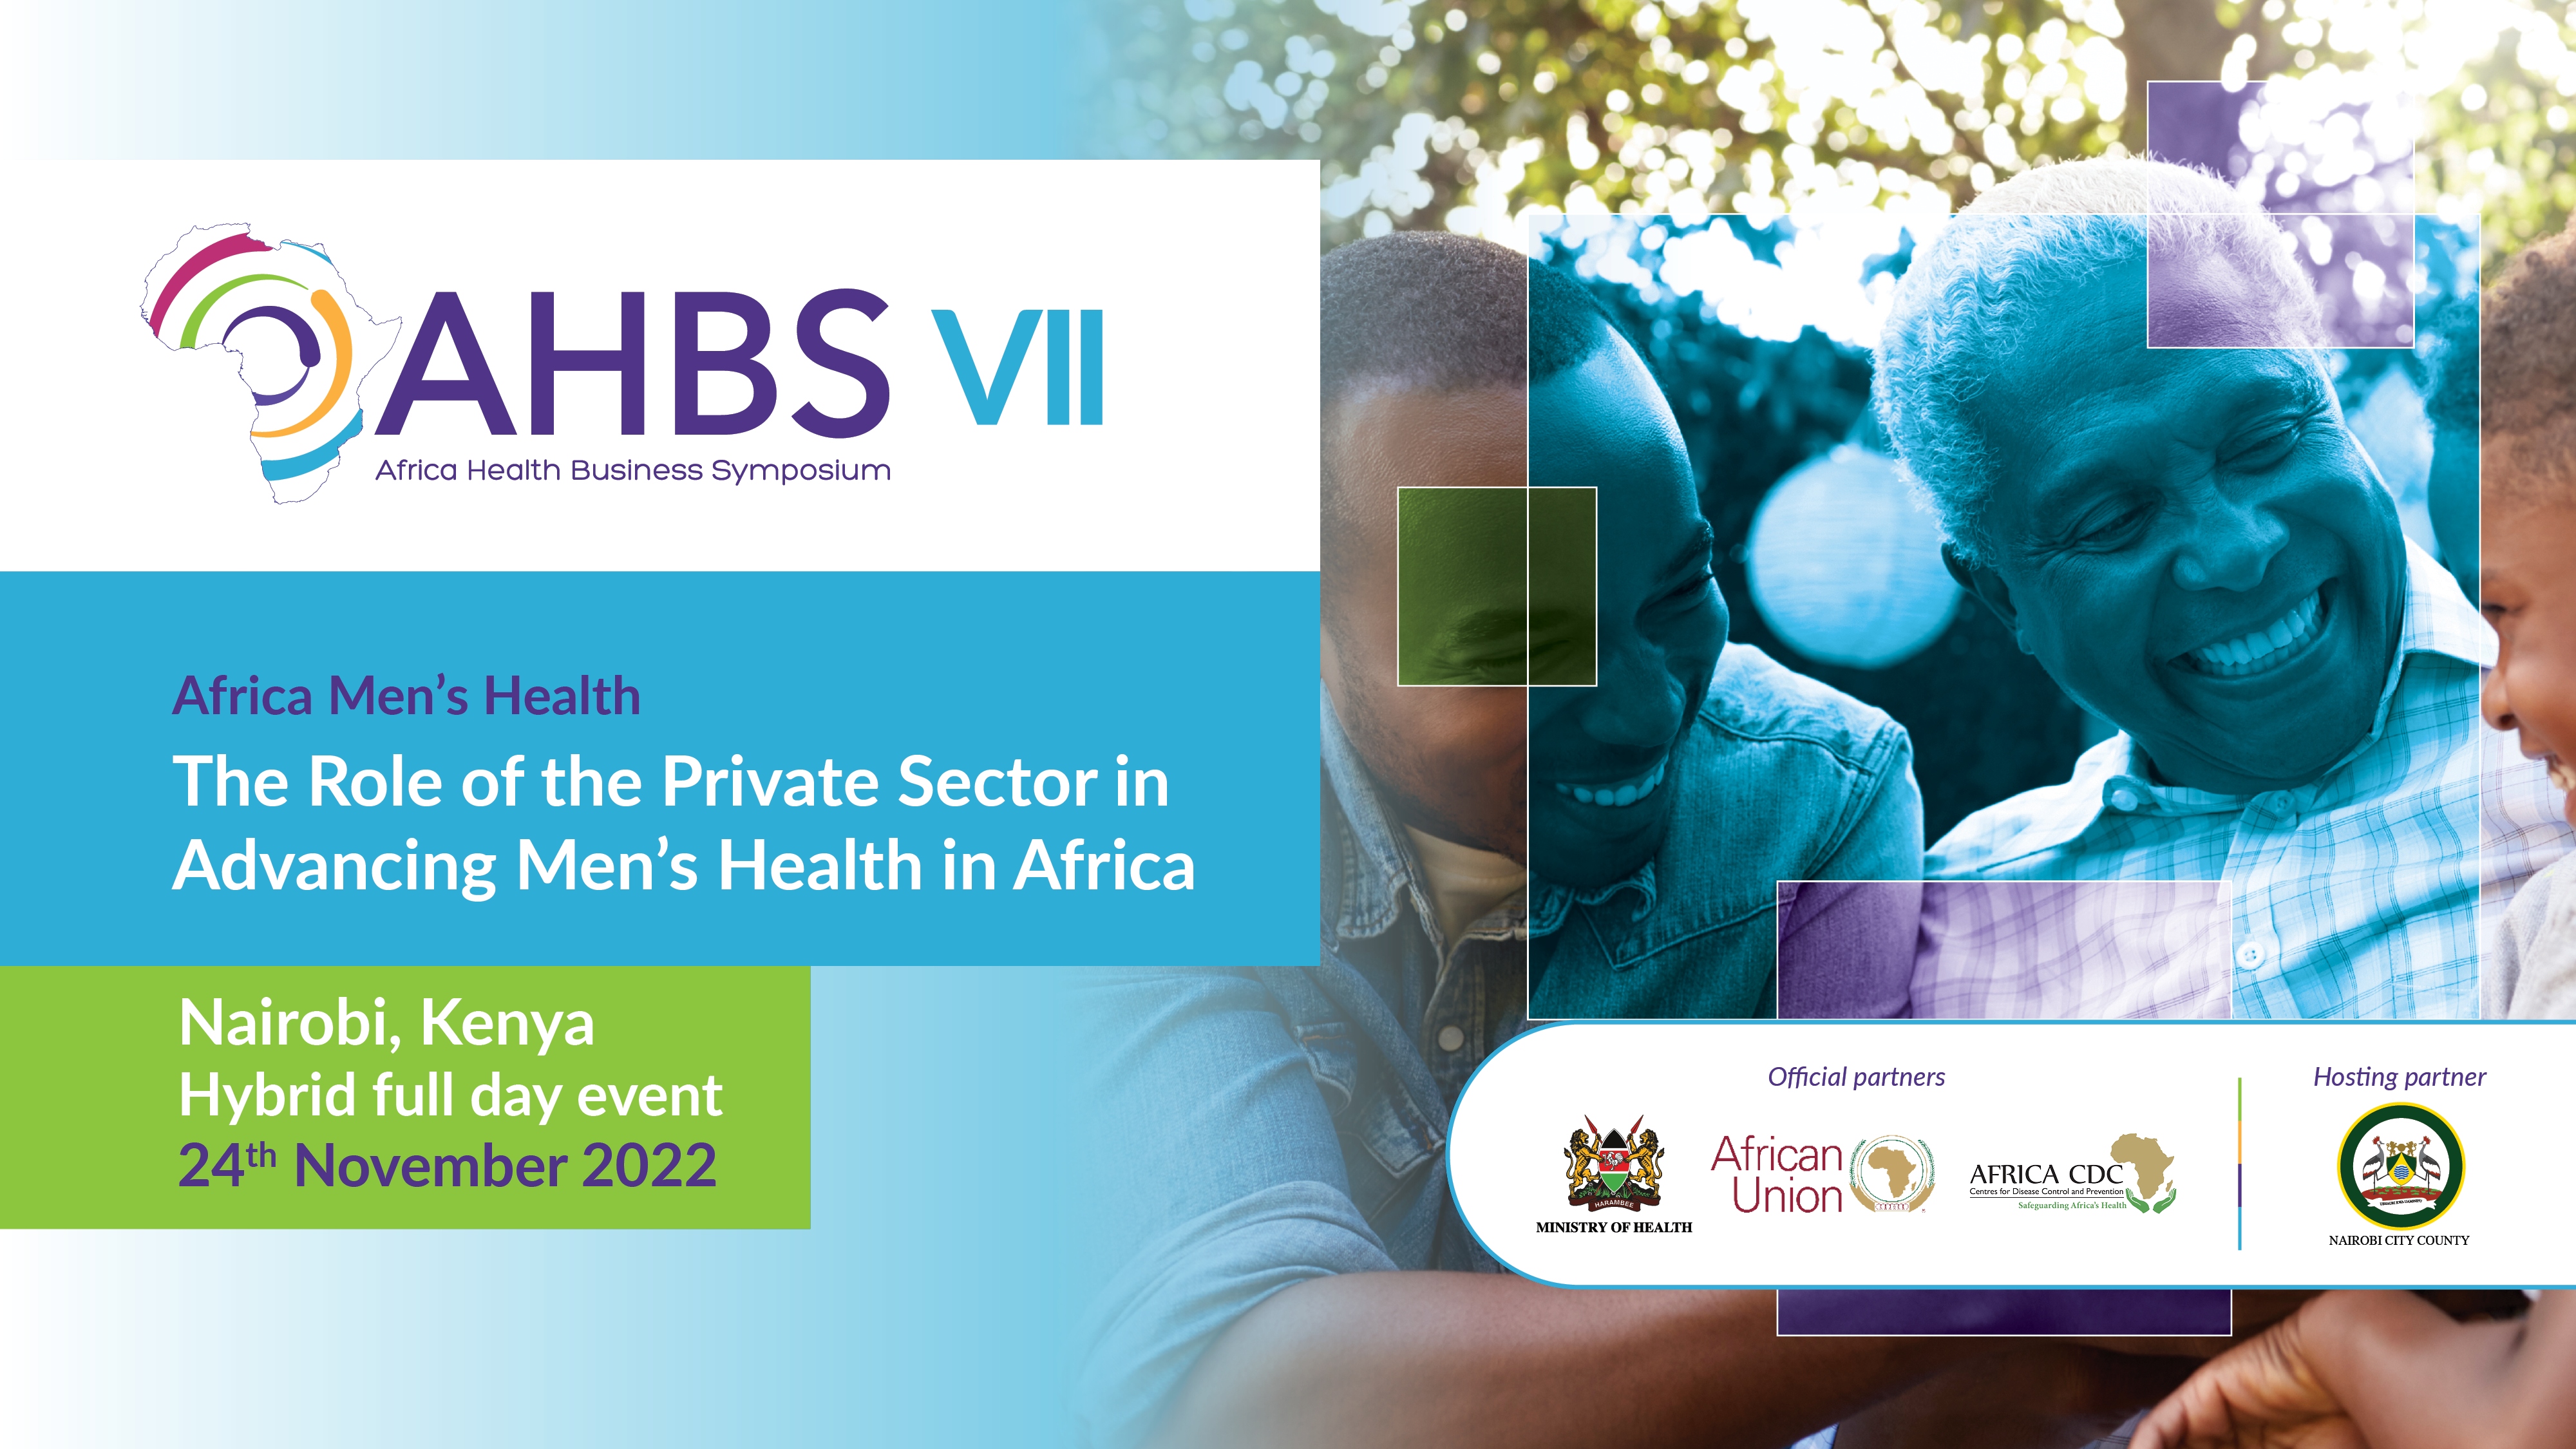 Africa Health Business Symposium (AHBS) - Africa Men's Health